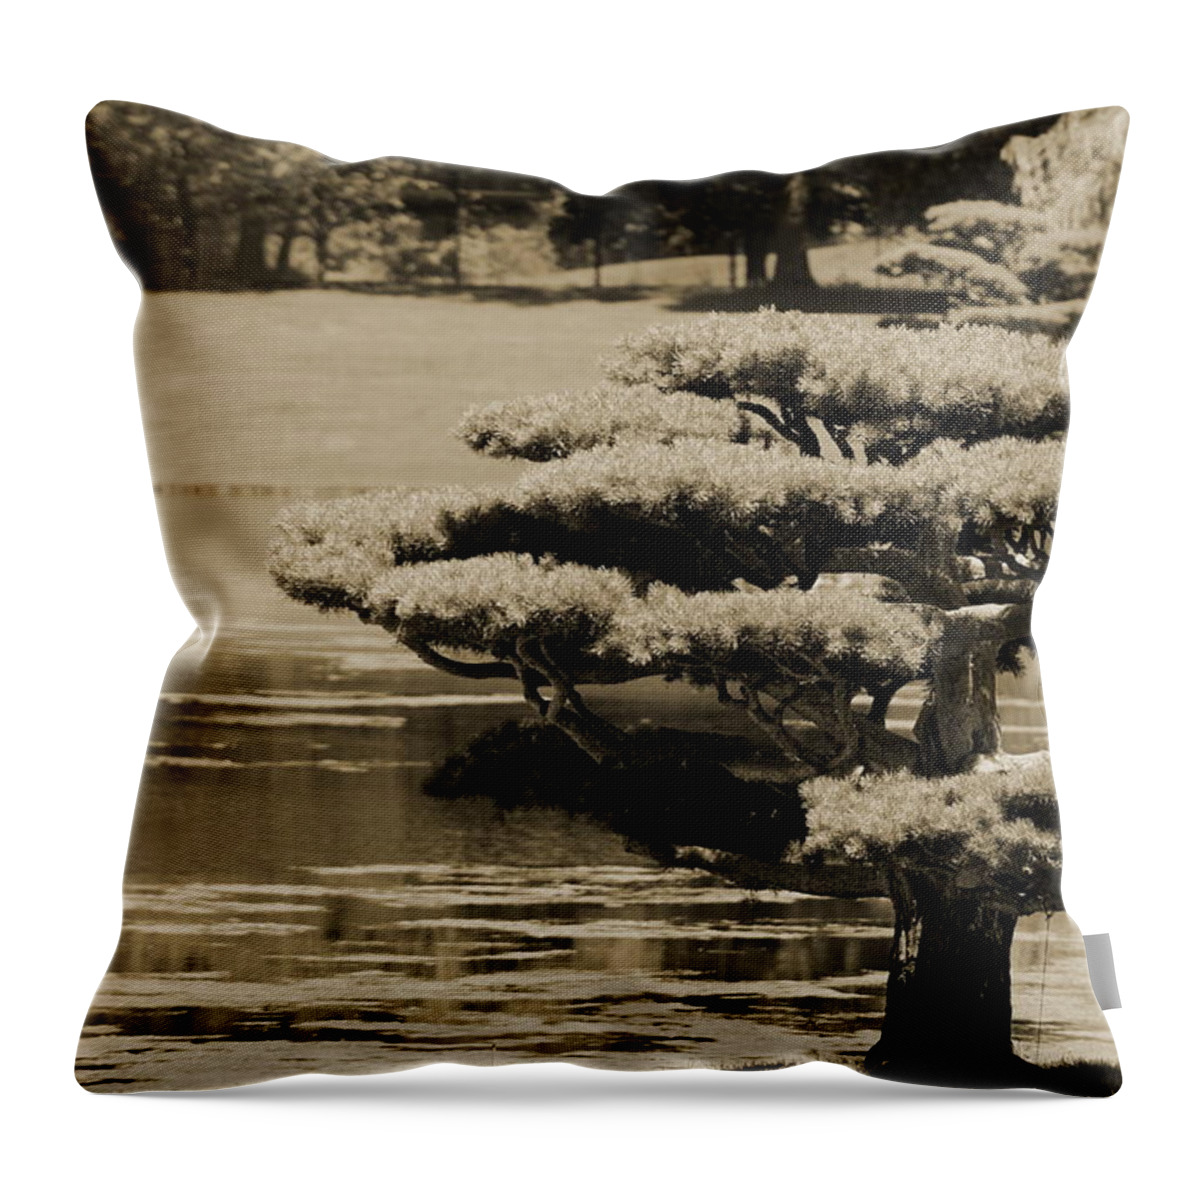 Bonsai Throw Pillow featuring the photograph Bonsai Tree Near Pond in Sepia by Colleen Cornelius